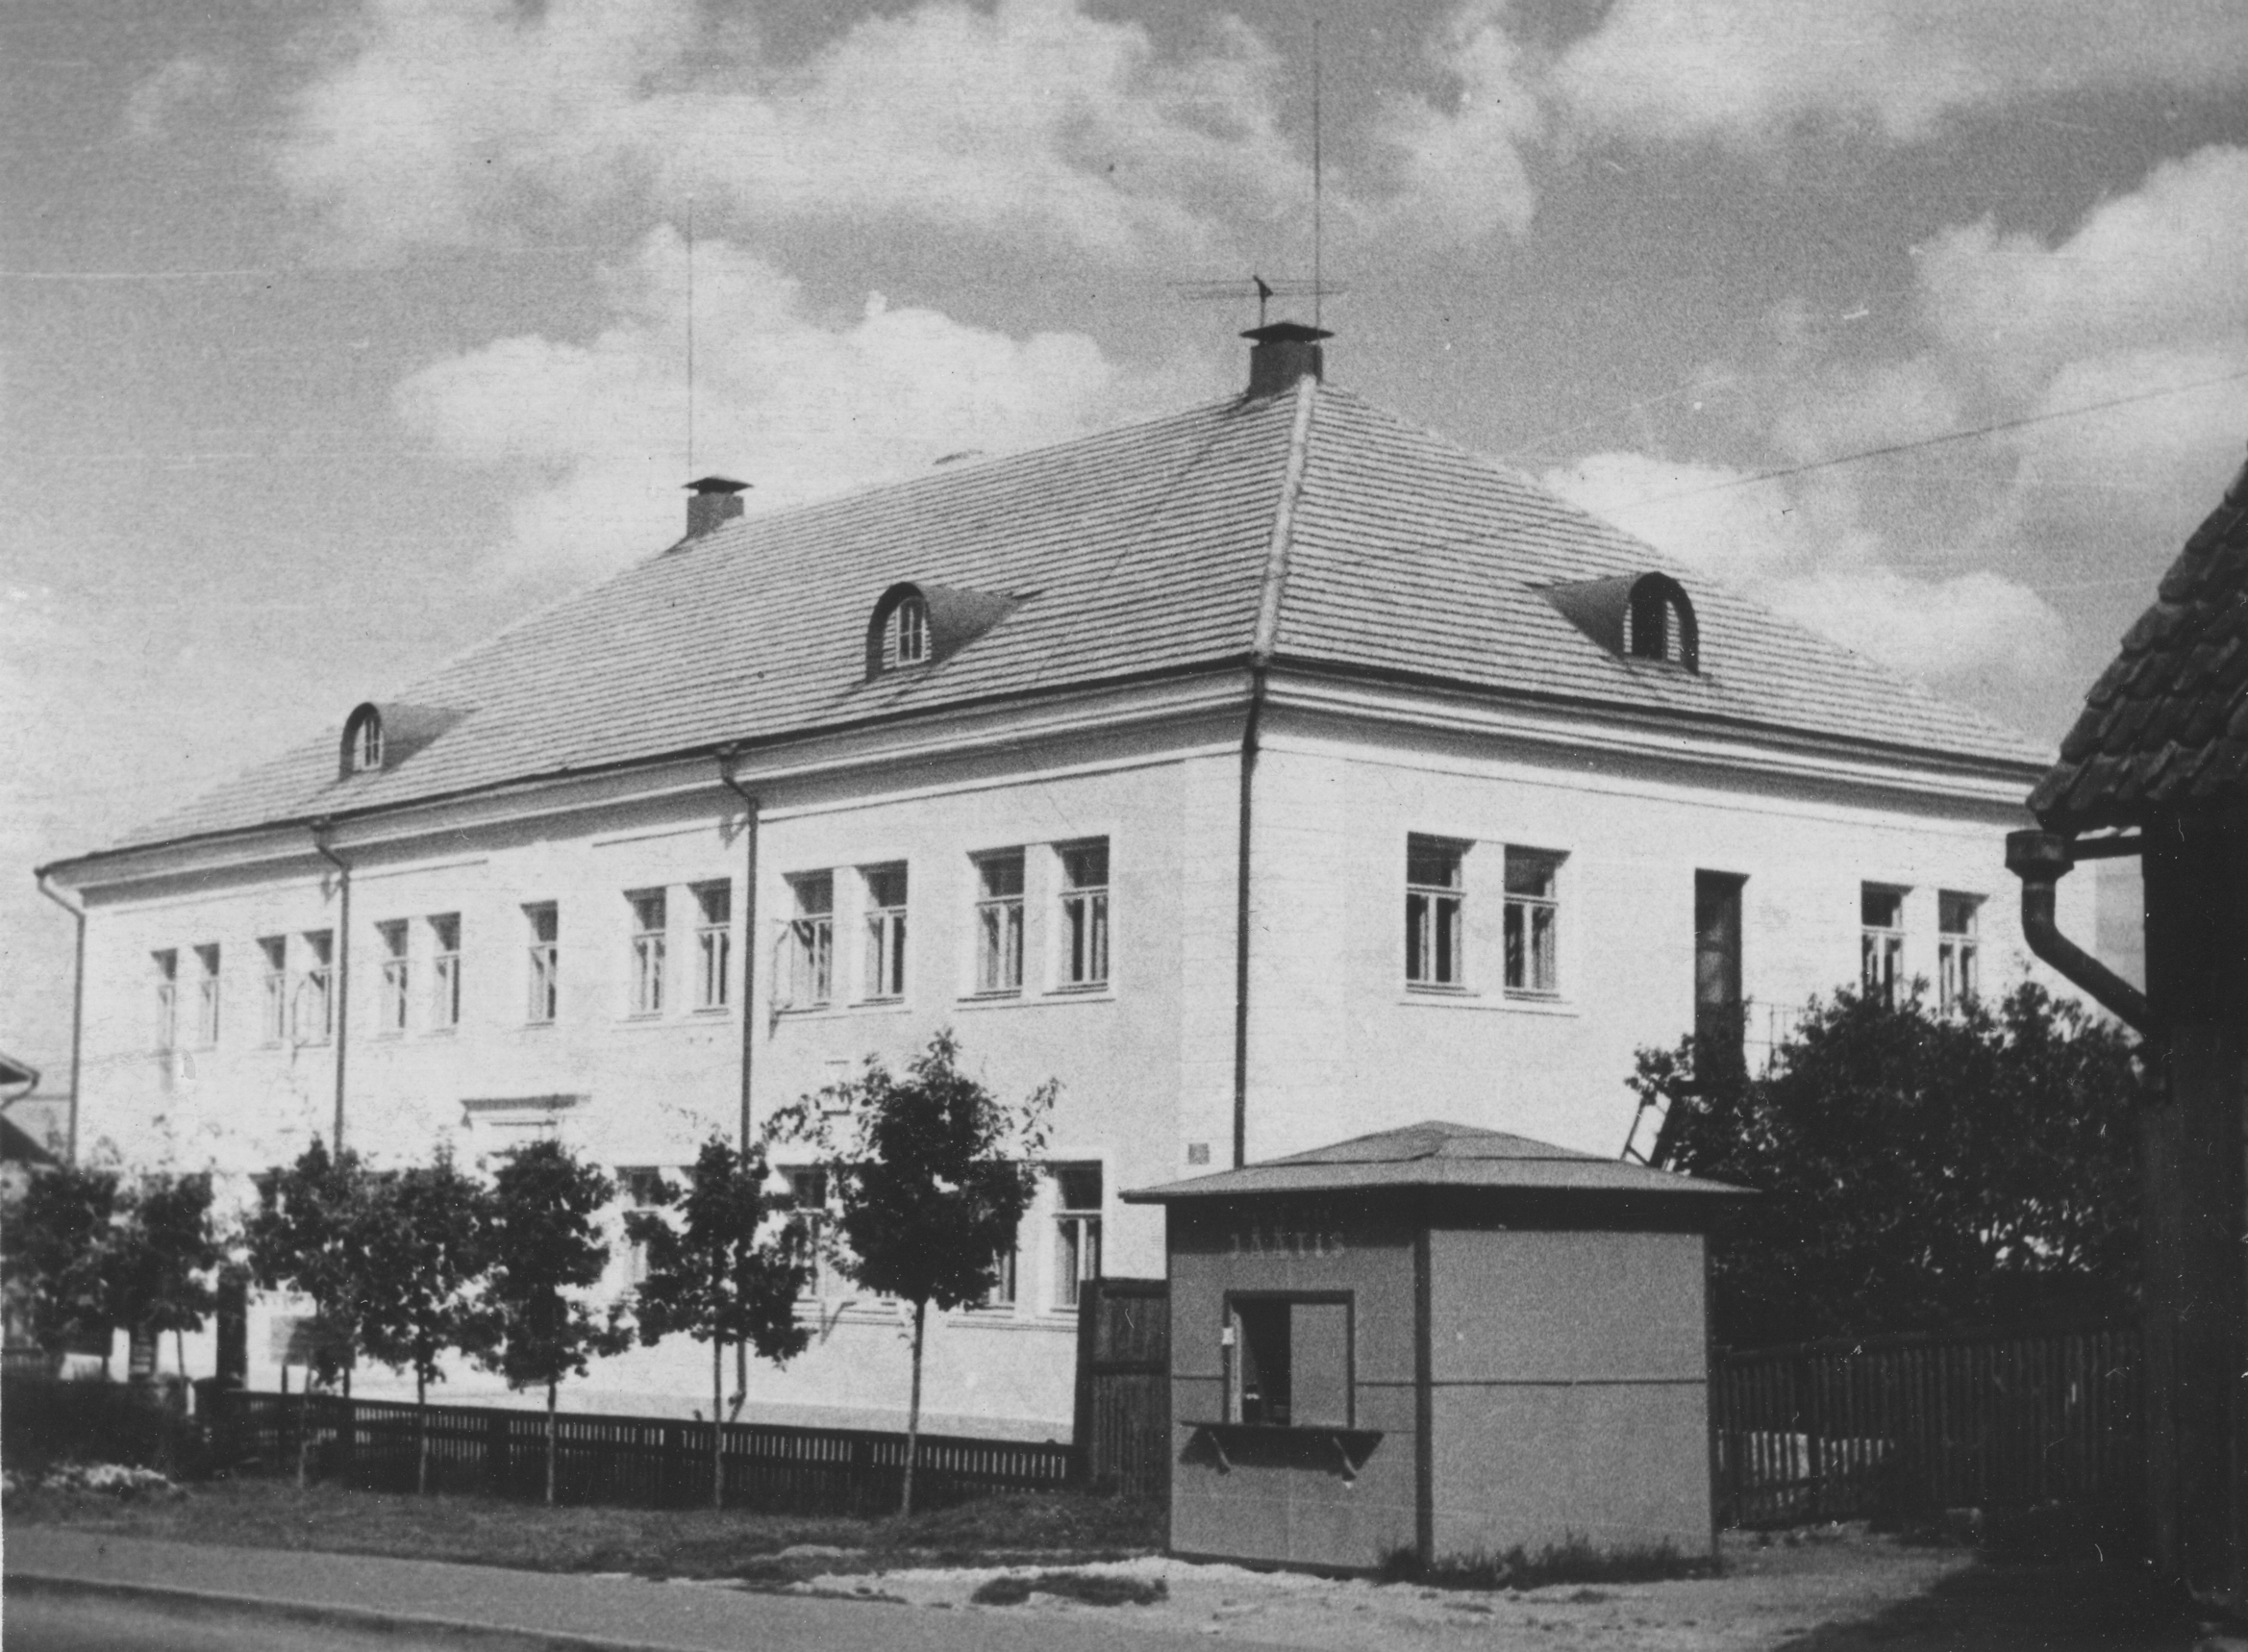 Pärnu Street, beginning of the 60s